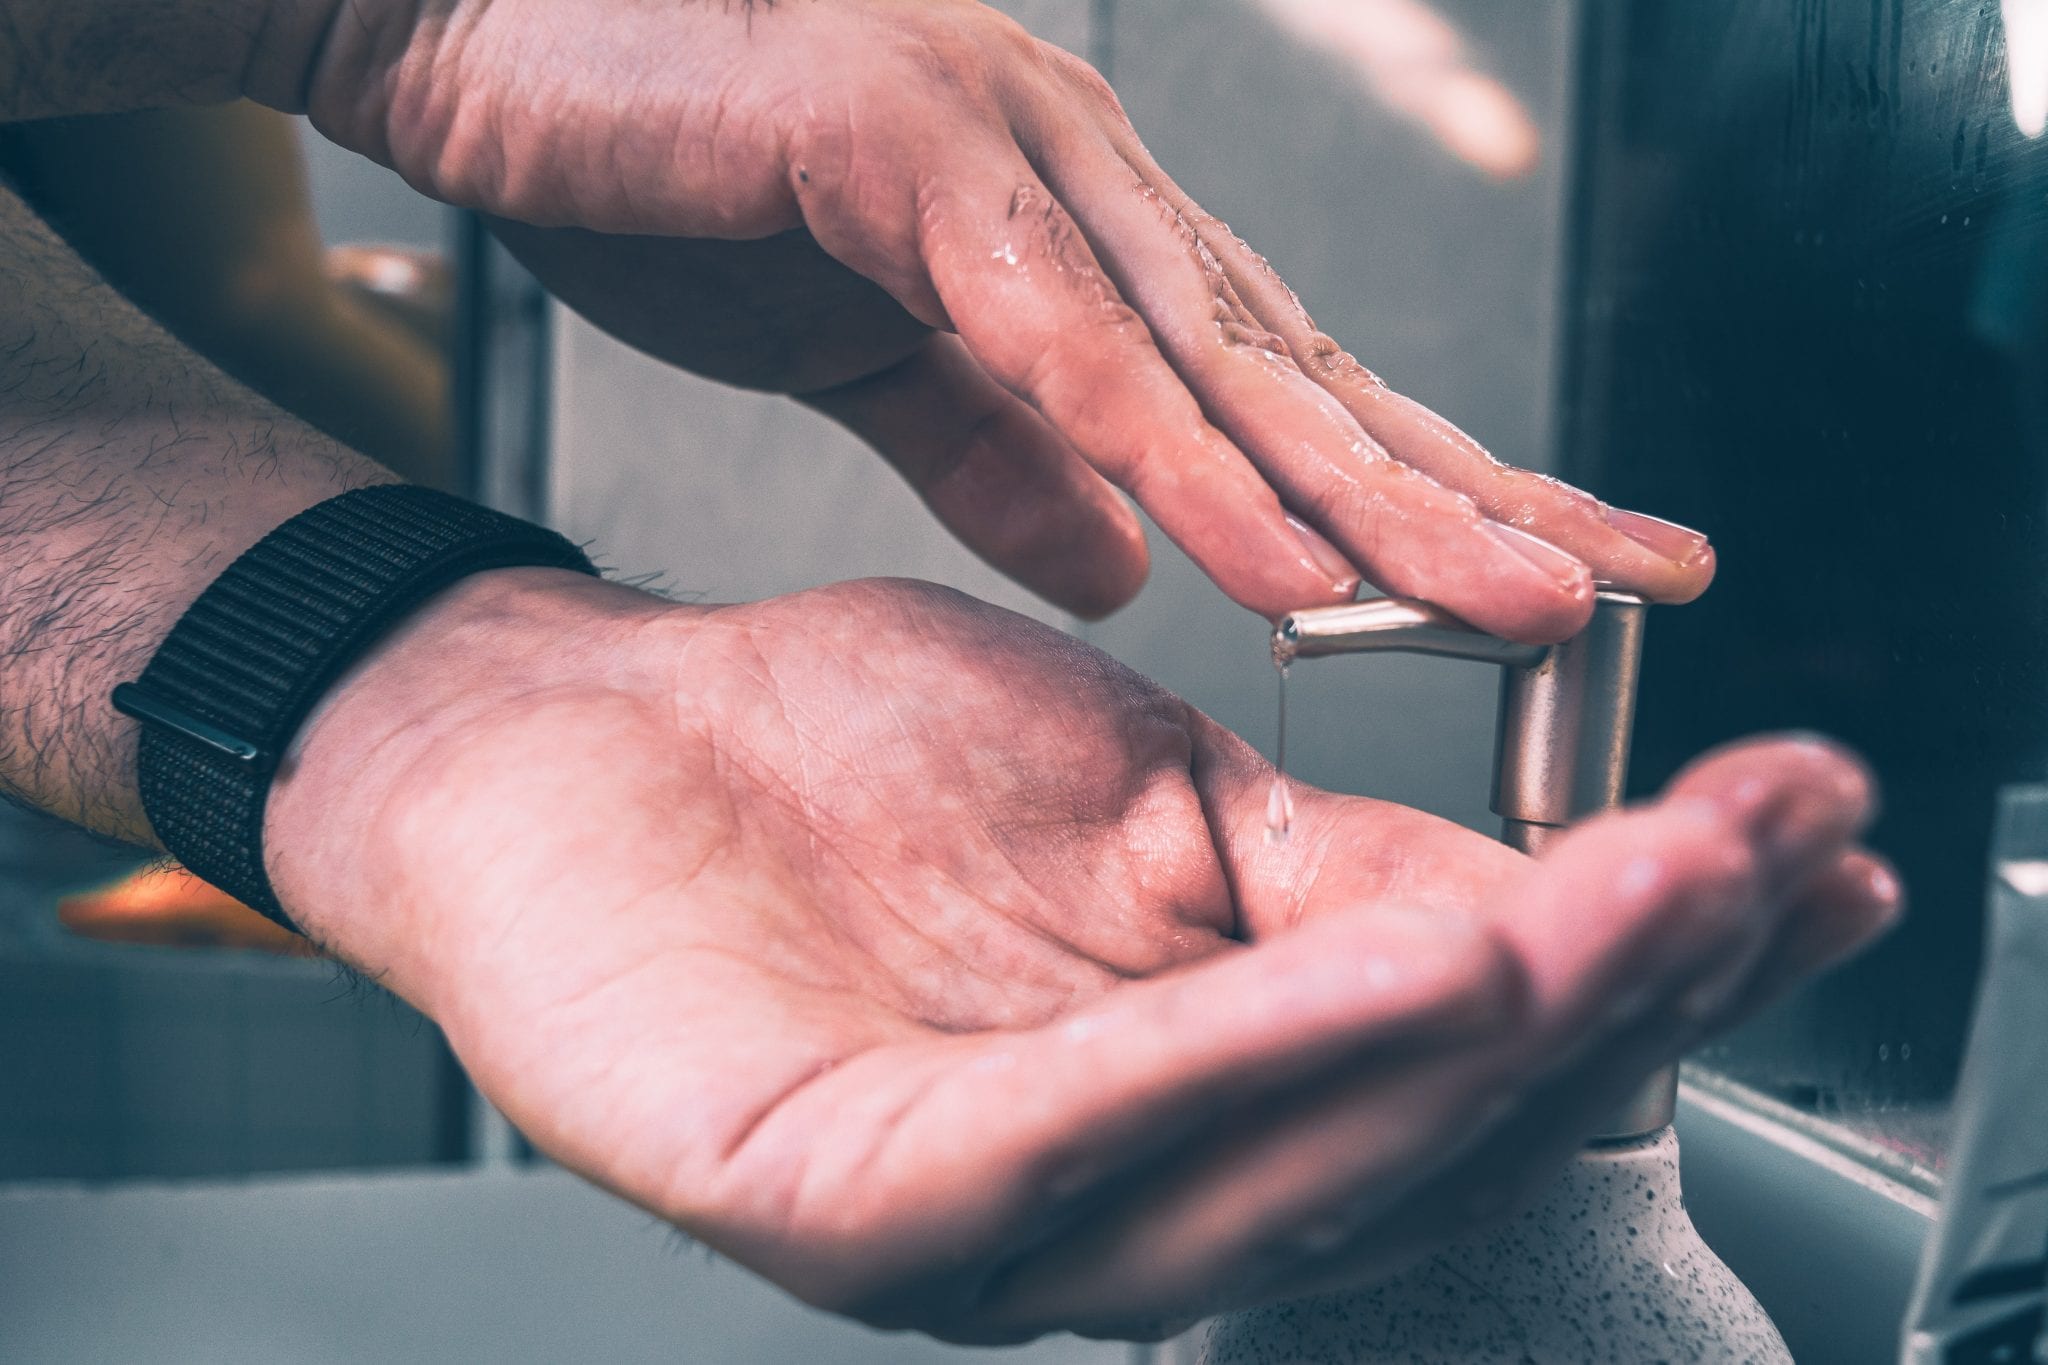  Masculine hands applying soap, photo by Christine Sandu via Unsplash 